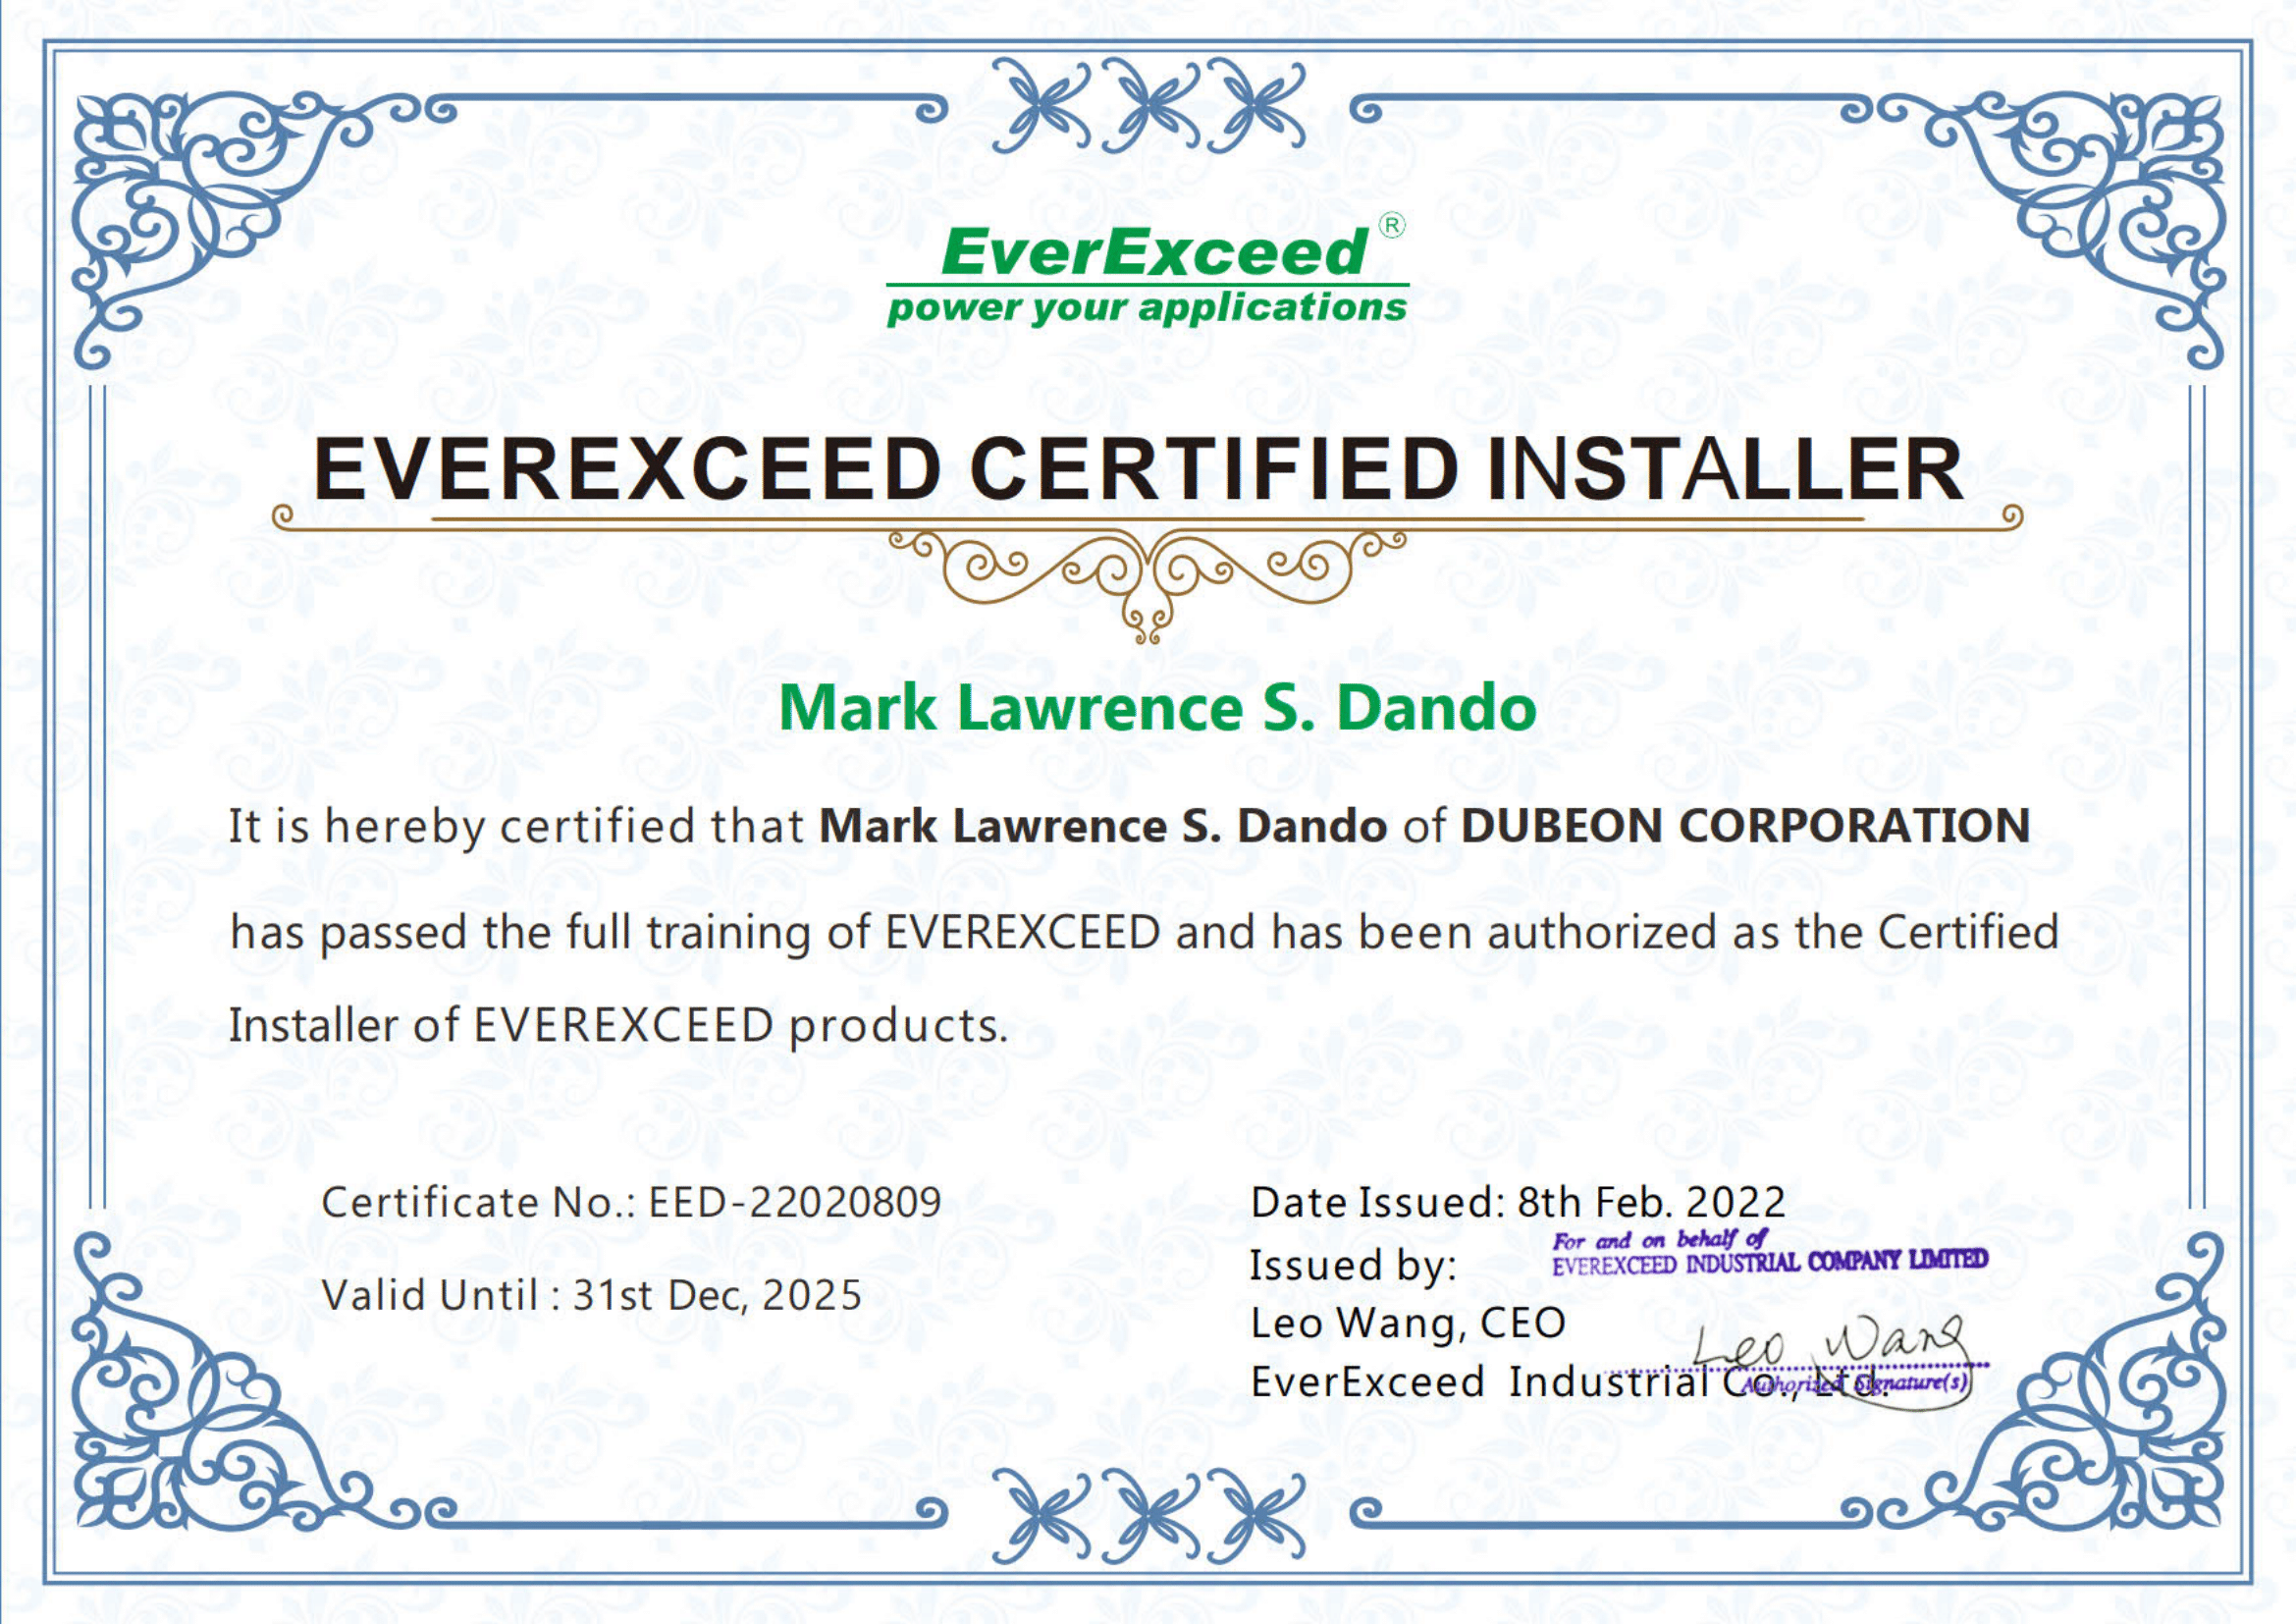 Certified Installer - Dubeon - Mark Lawrence S. Dando_1-1.png